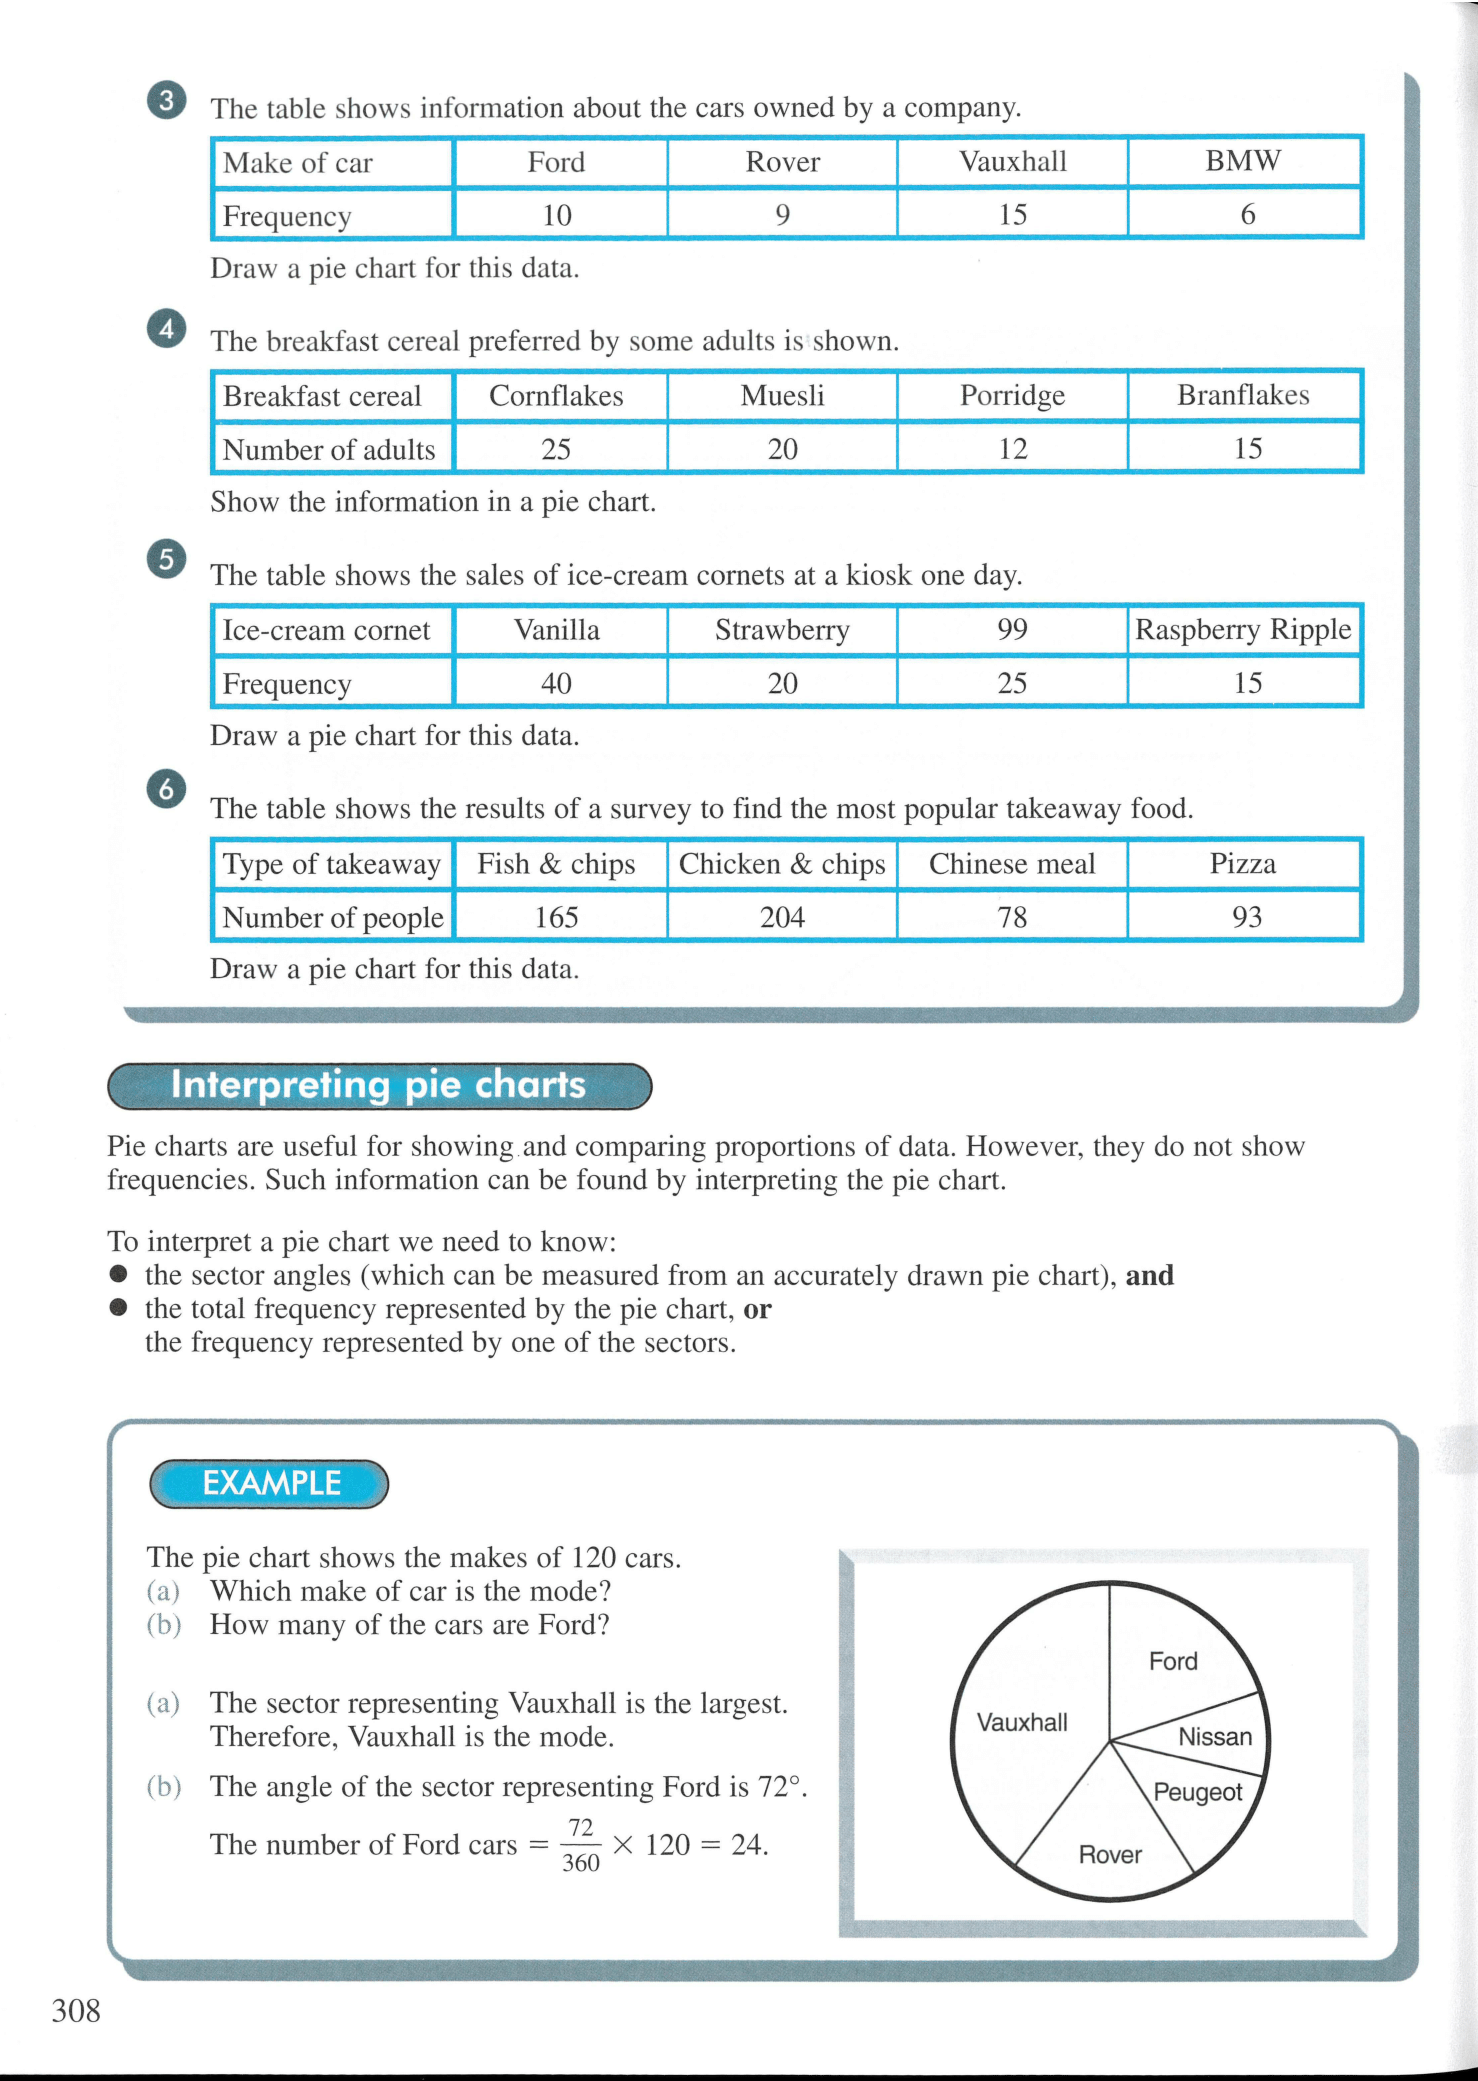 Mathematics for AQA GCSE FOUNDATION TIER